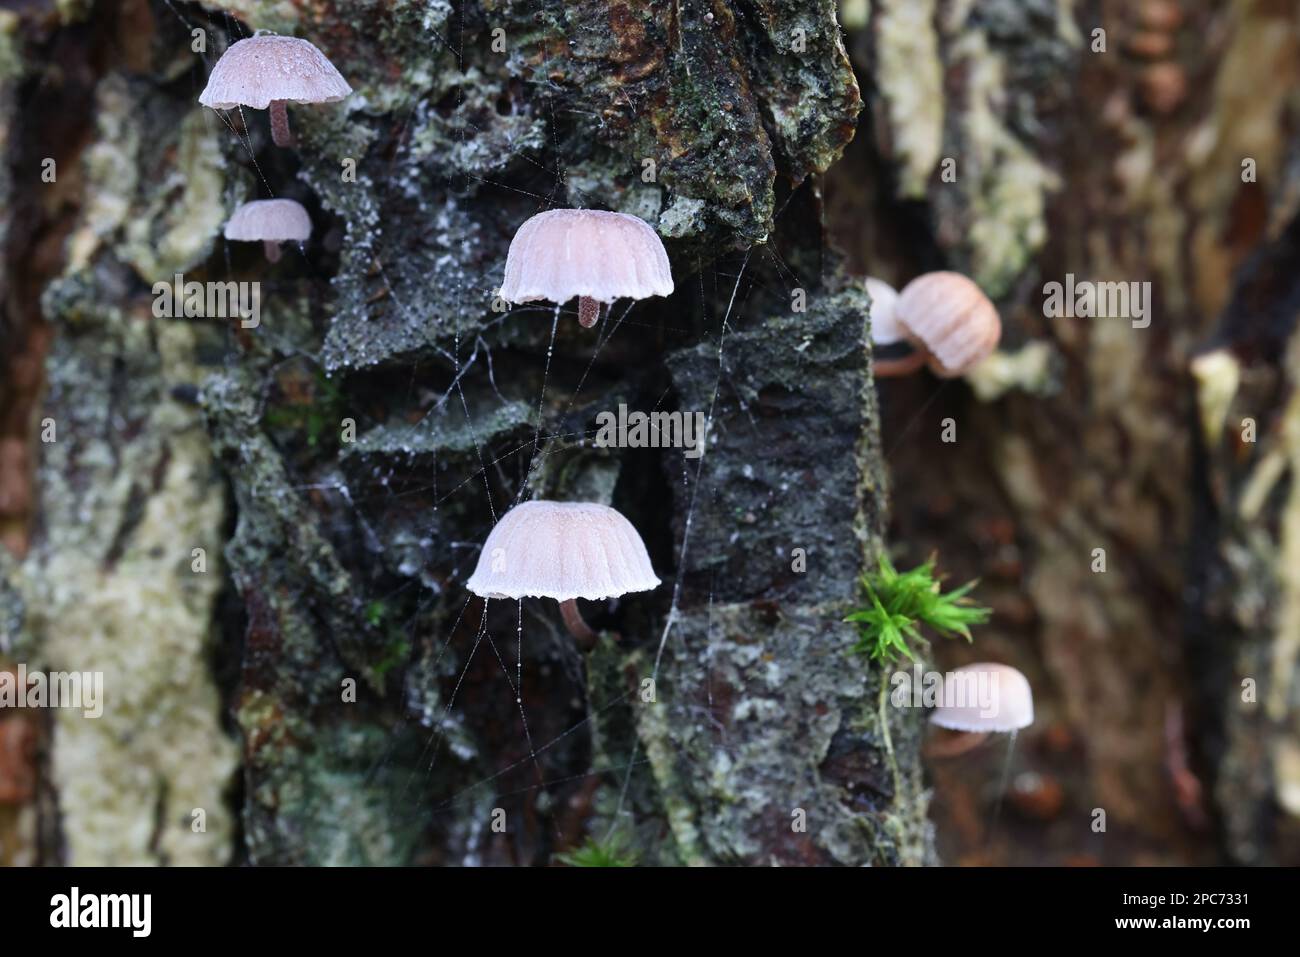 Mycena meliigena, a bonnet mushroom from Finland, no common English name Stock Photo